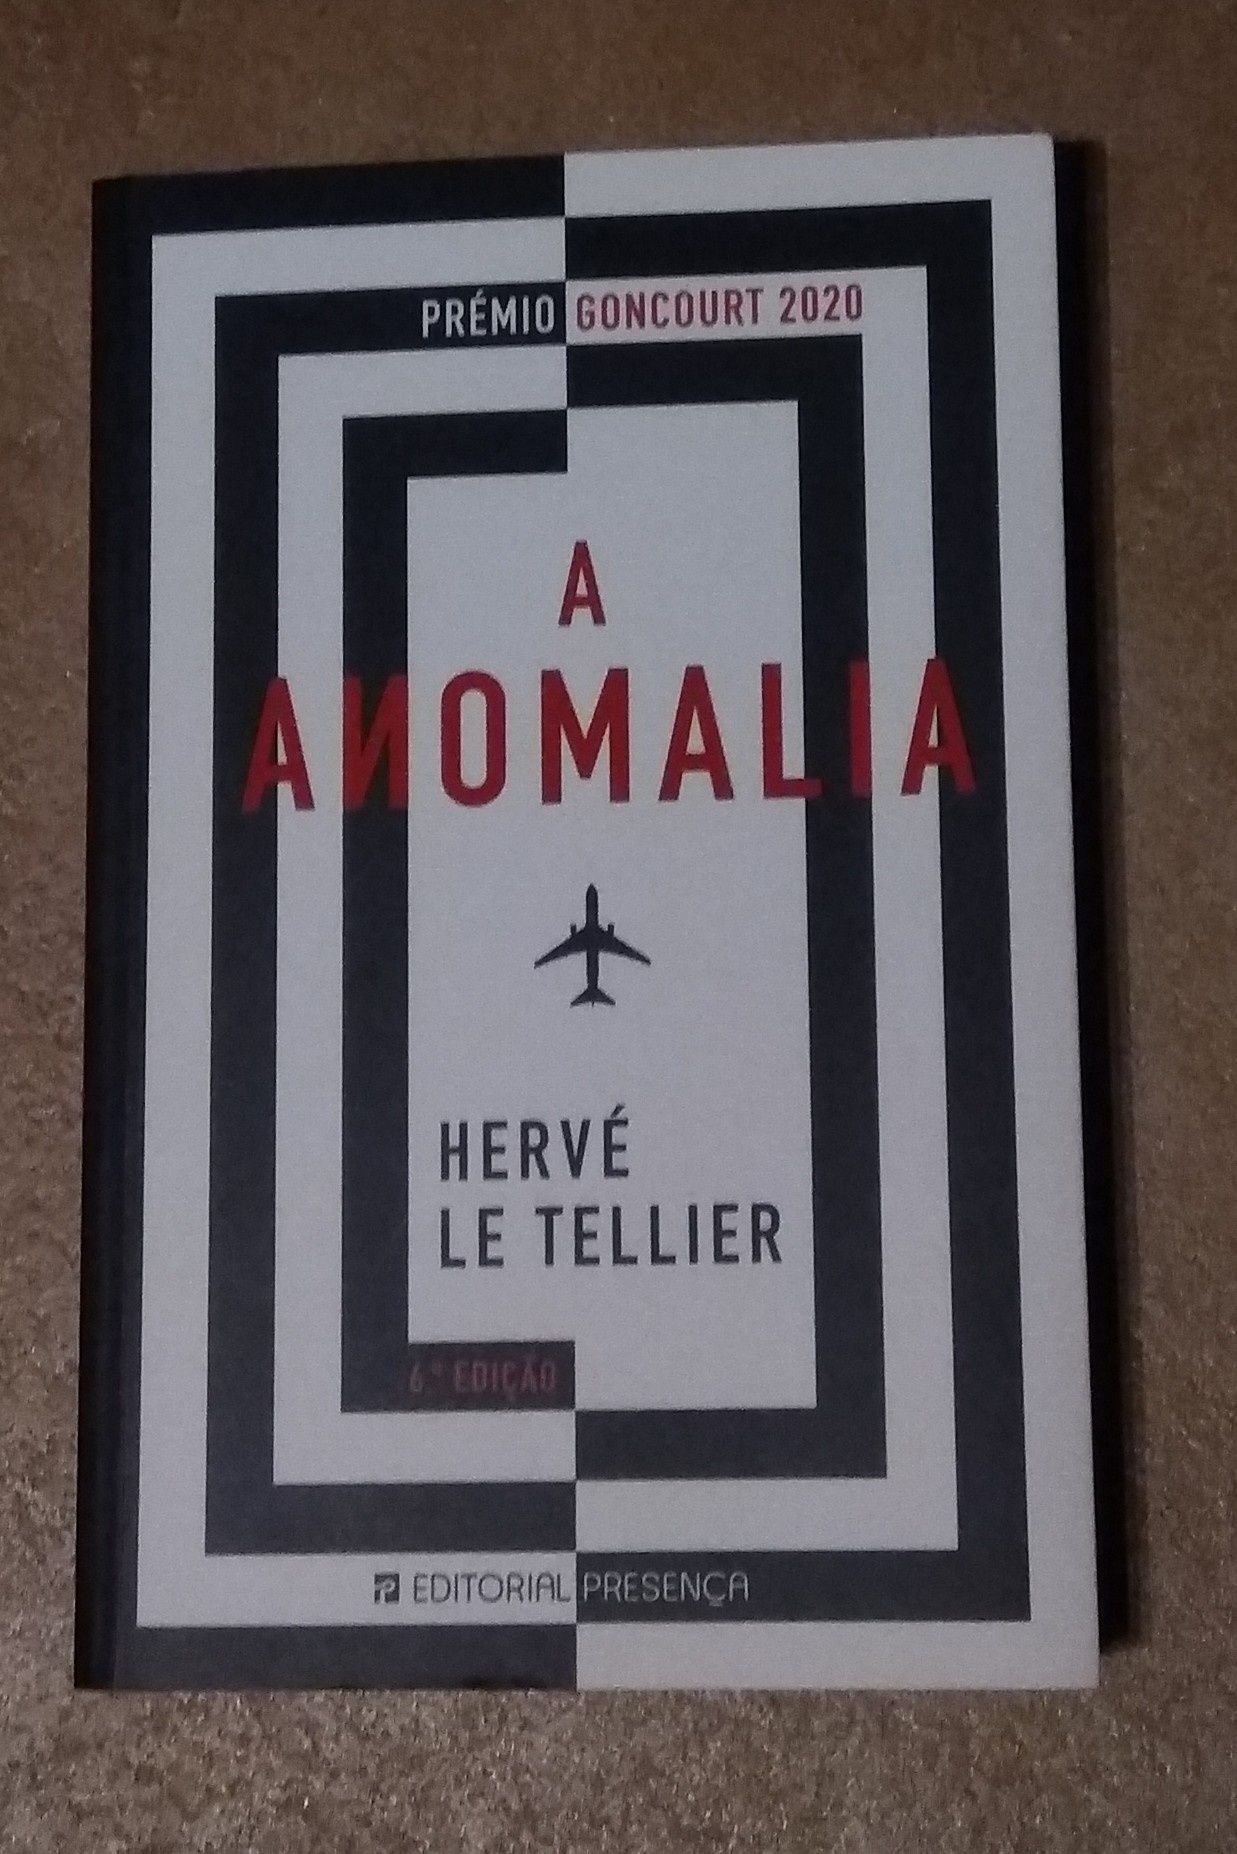 Livro "Anomalia" de Hervé le Tellier